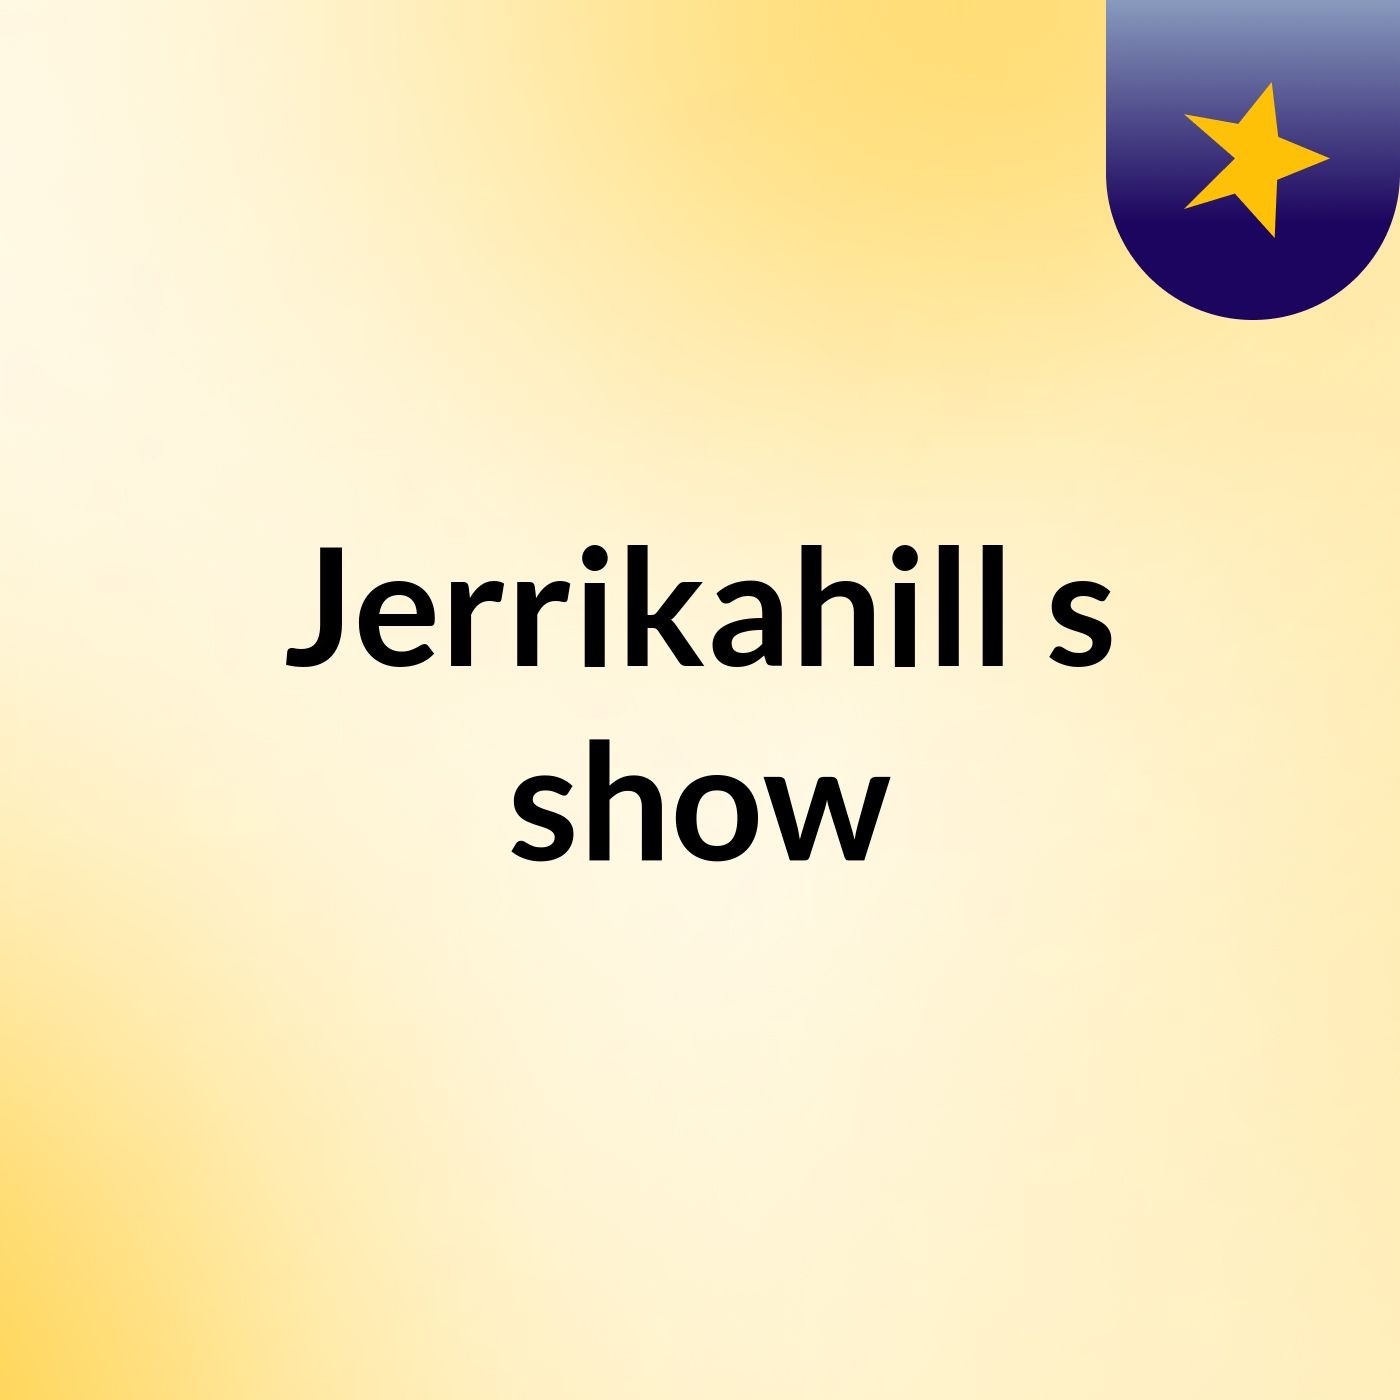 Jerrikahill's show